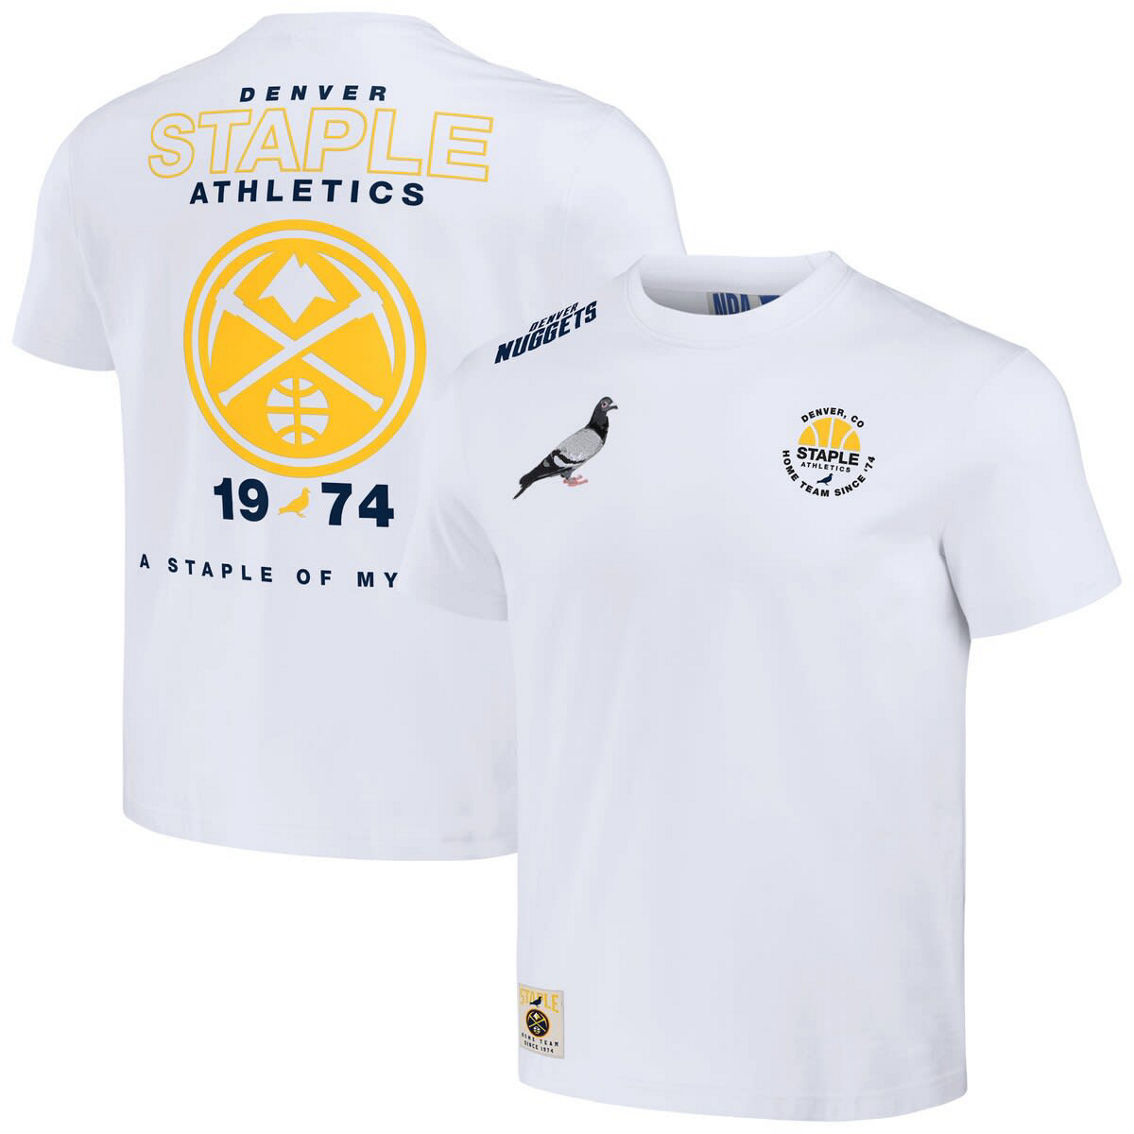 Staple Men's NBA x Cream Denver Nuggets Home Team T-Shirt